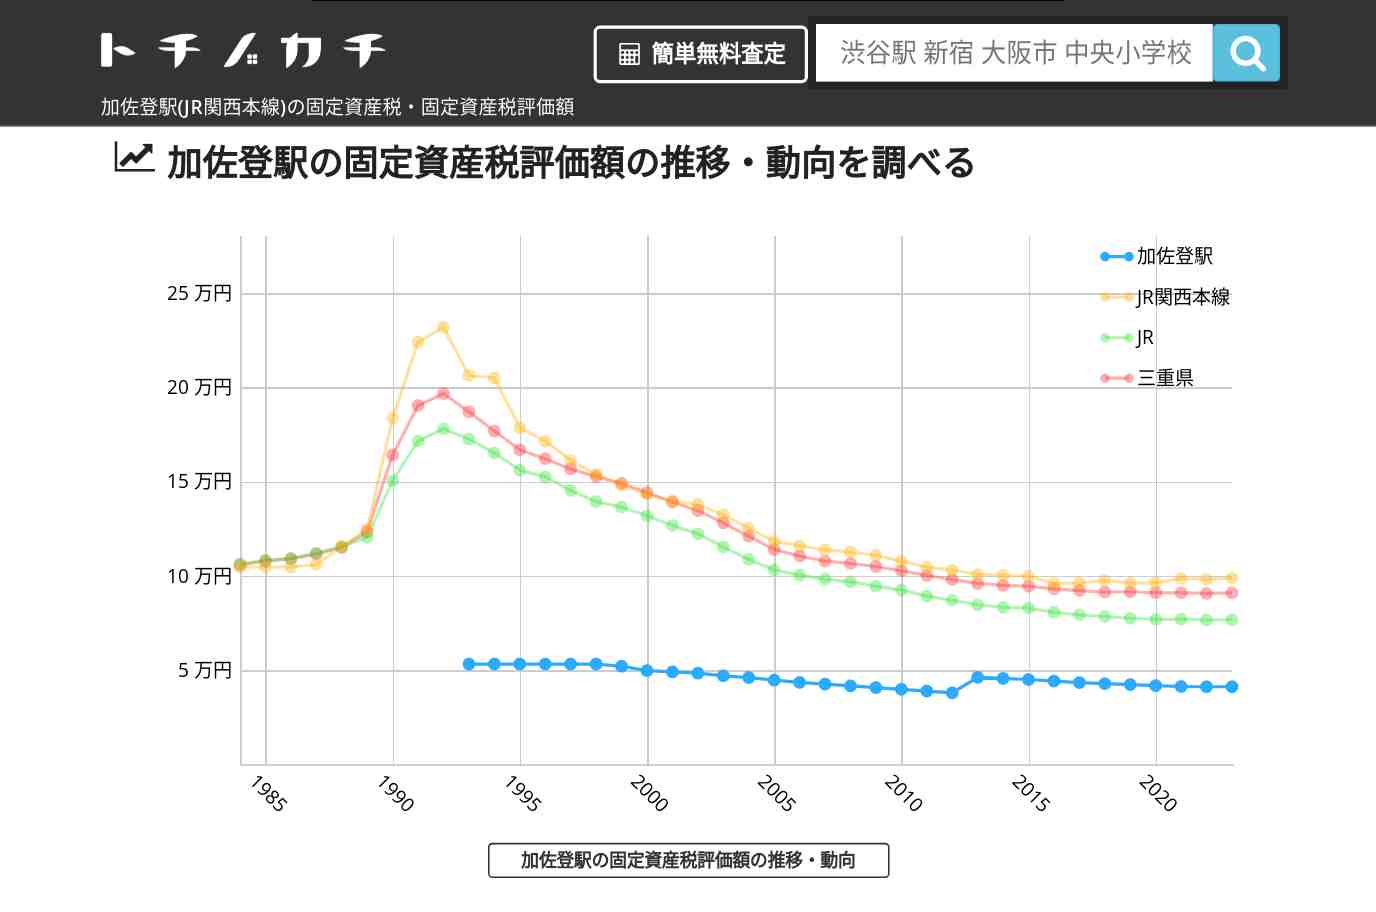 加佐登駅(JR関西本線)の固定資産税・固定資産税評価額 | トチノカチ